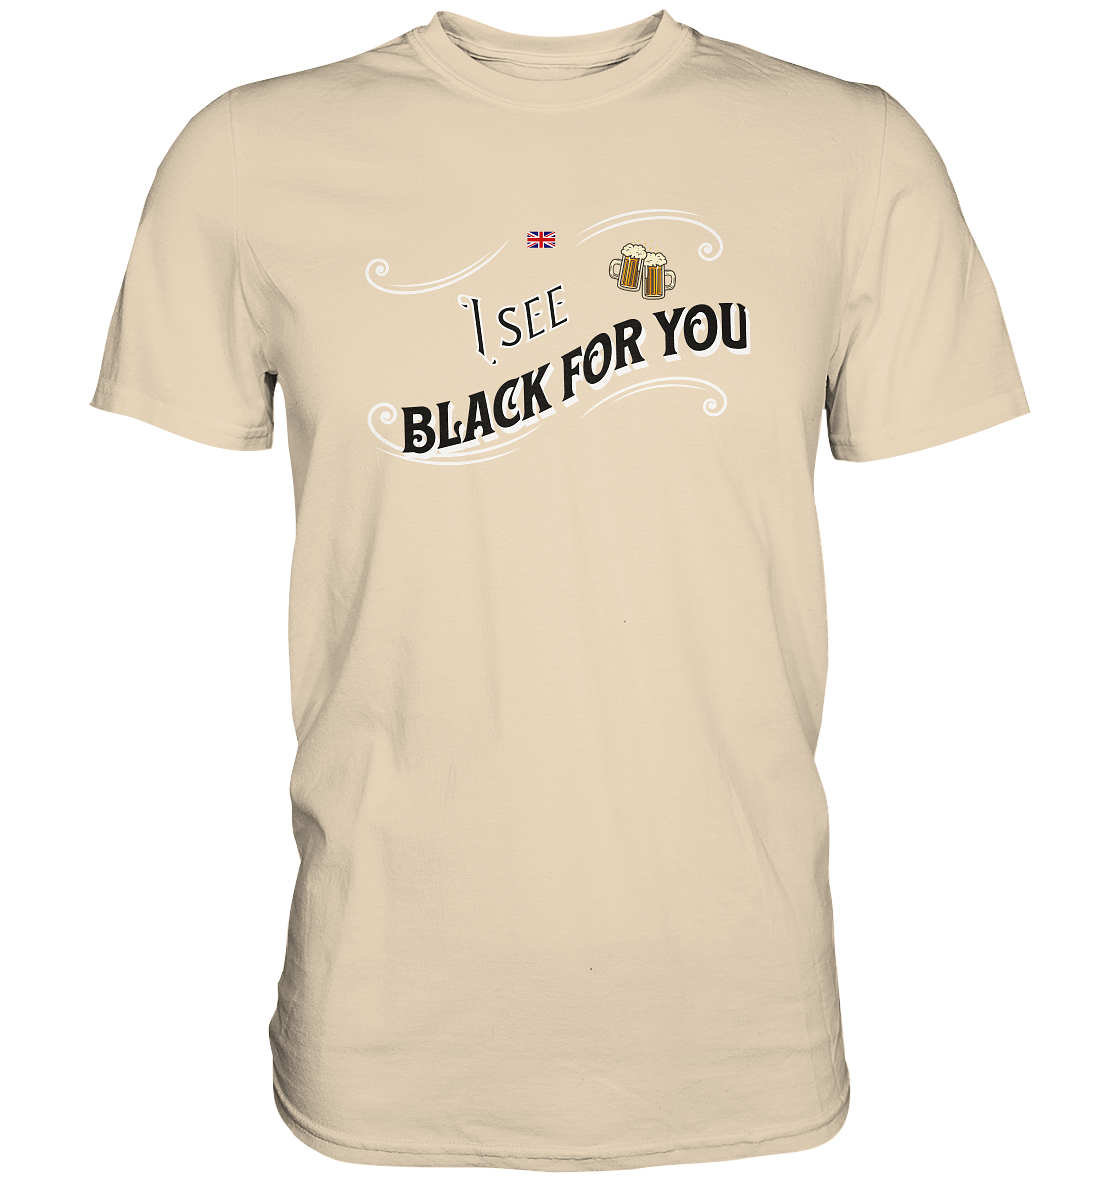 "I see black for you" - Premium Shirt